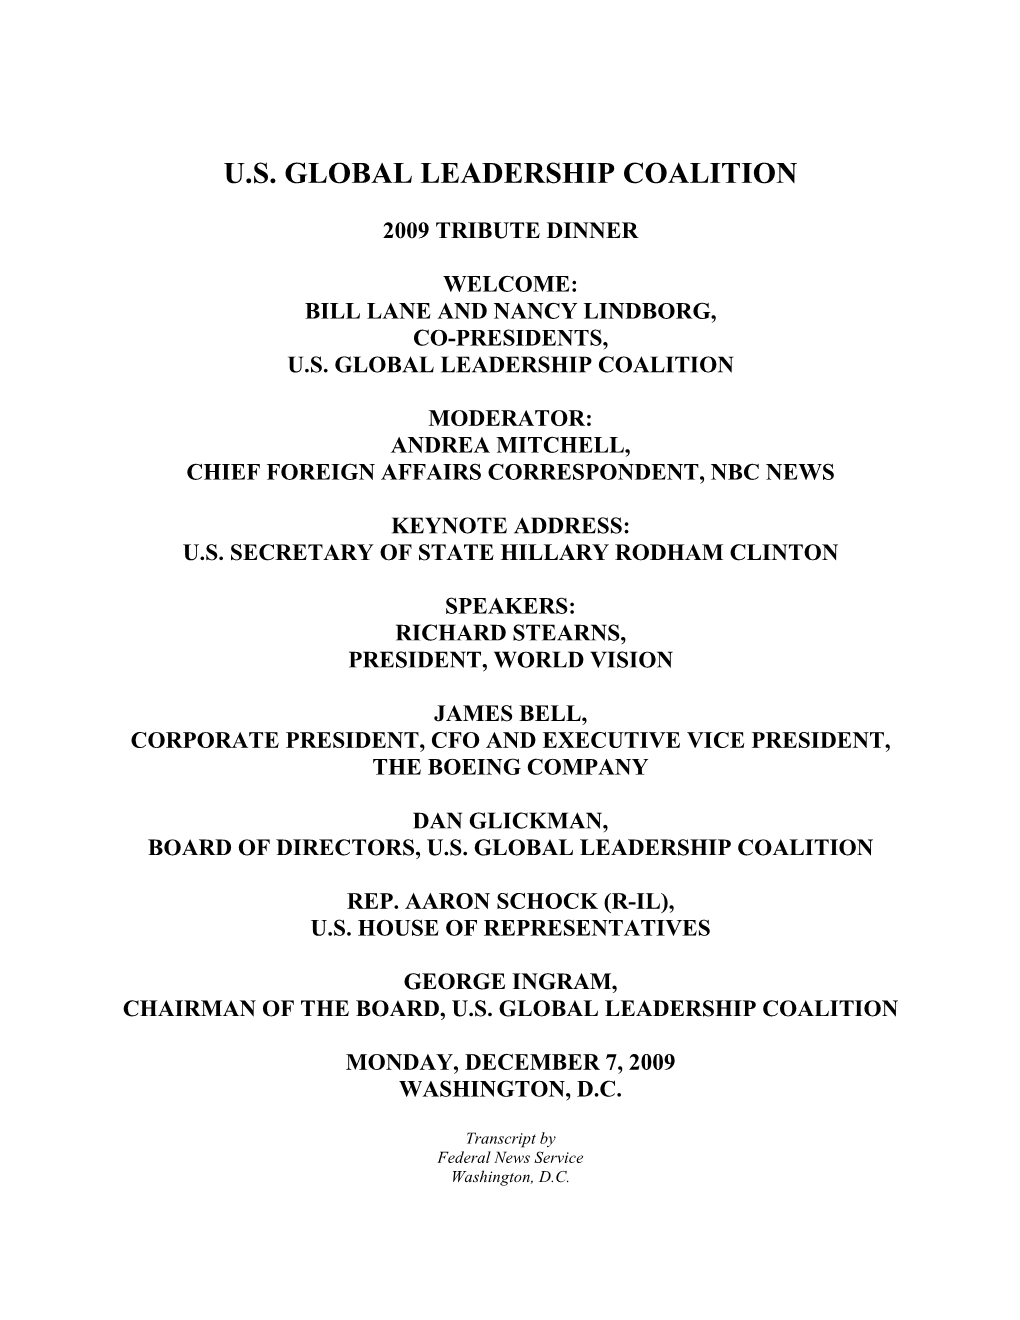 U.S. Global Leadership Coalition